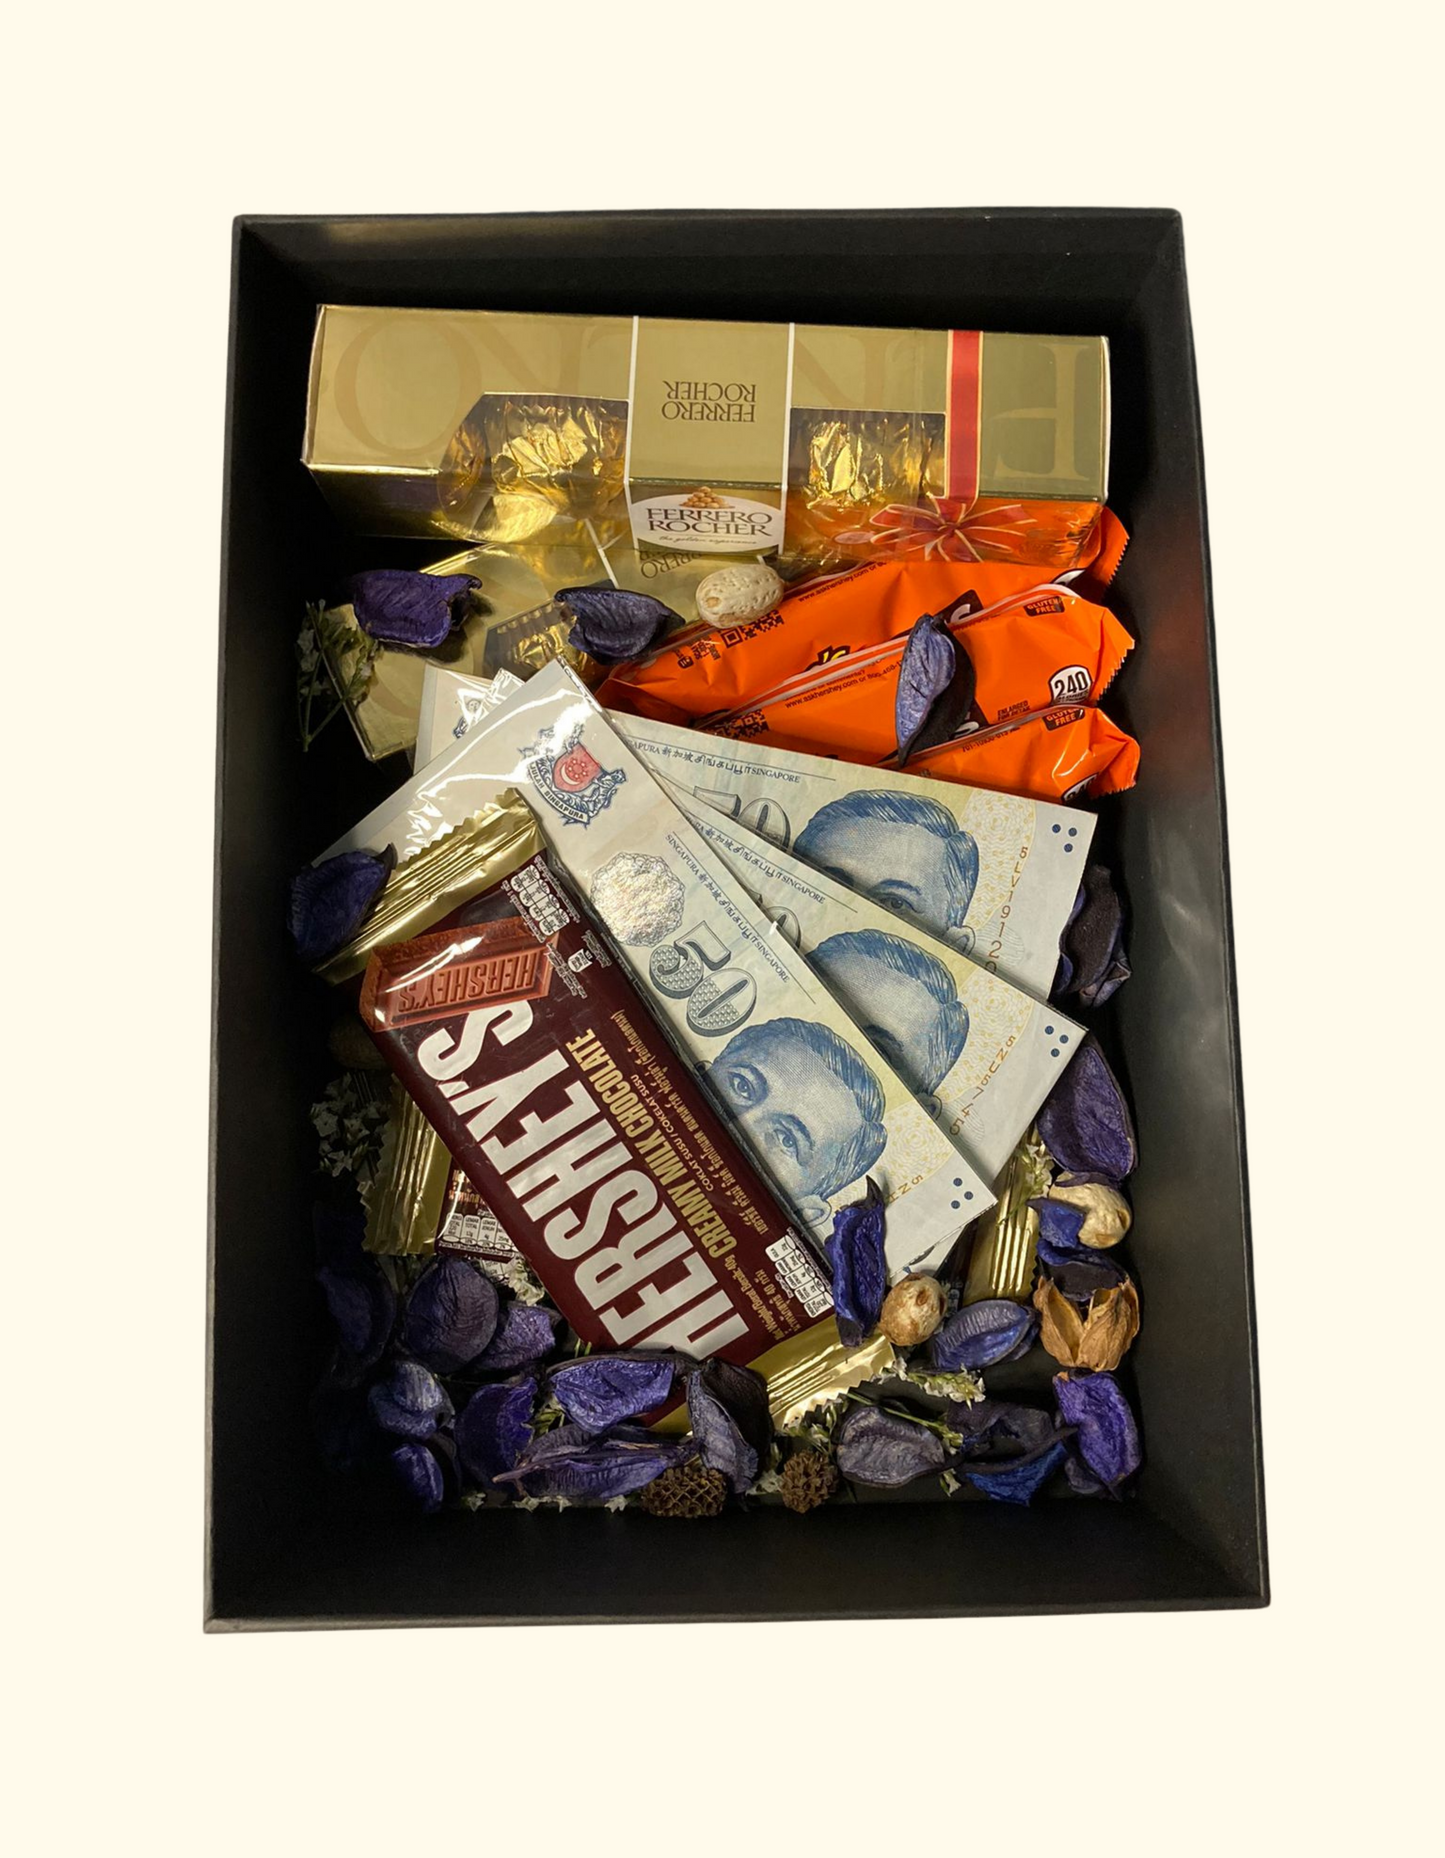 The Money Box gift set